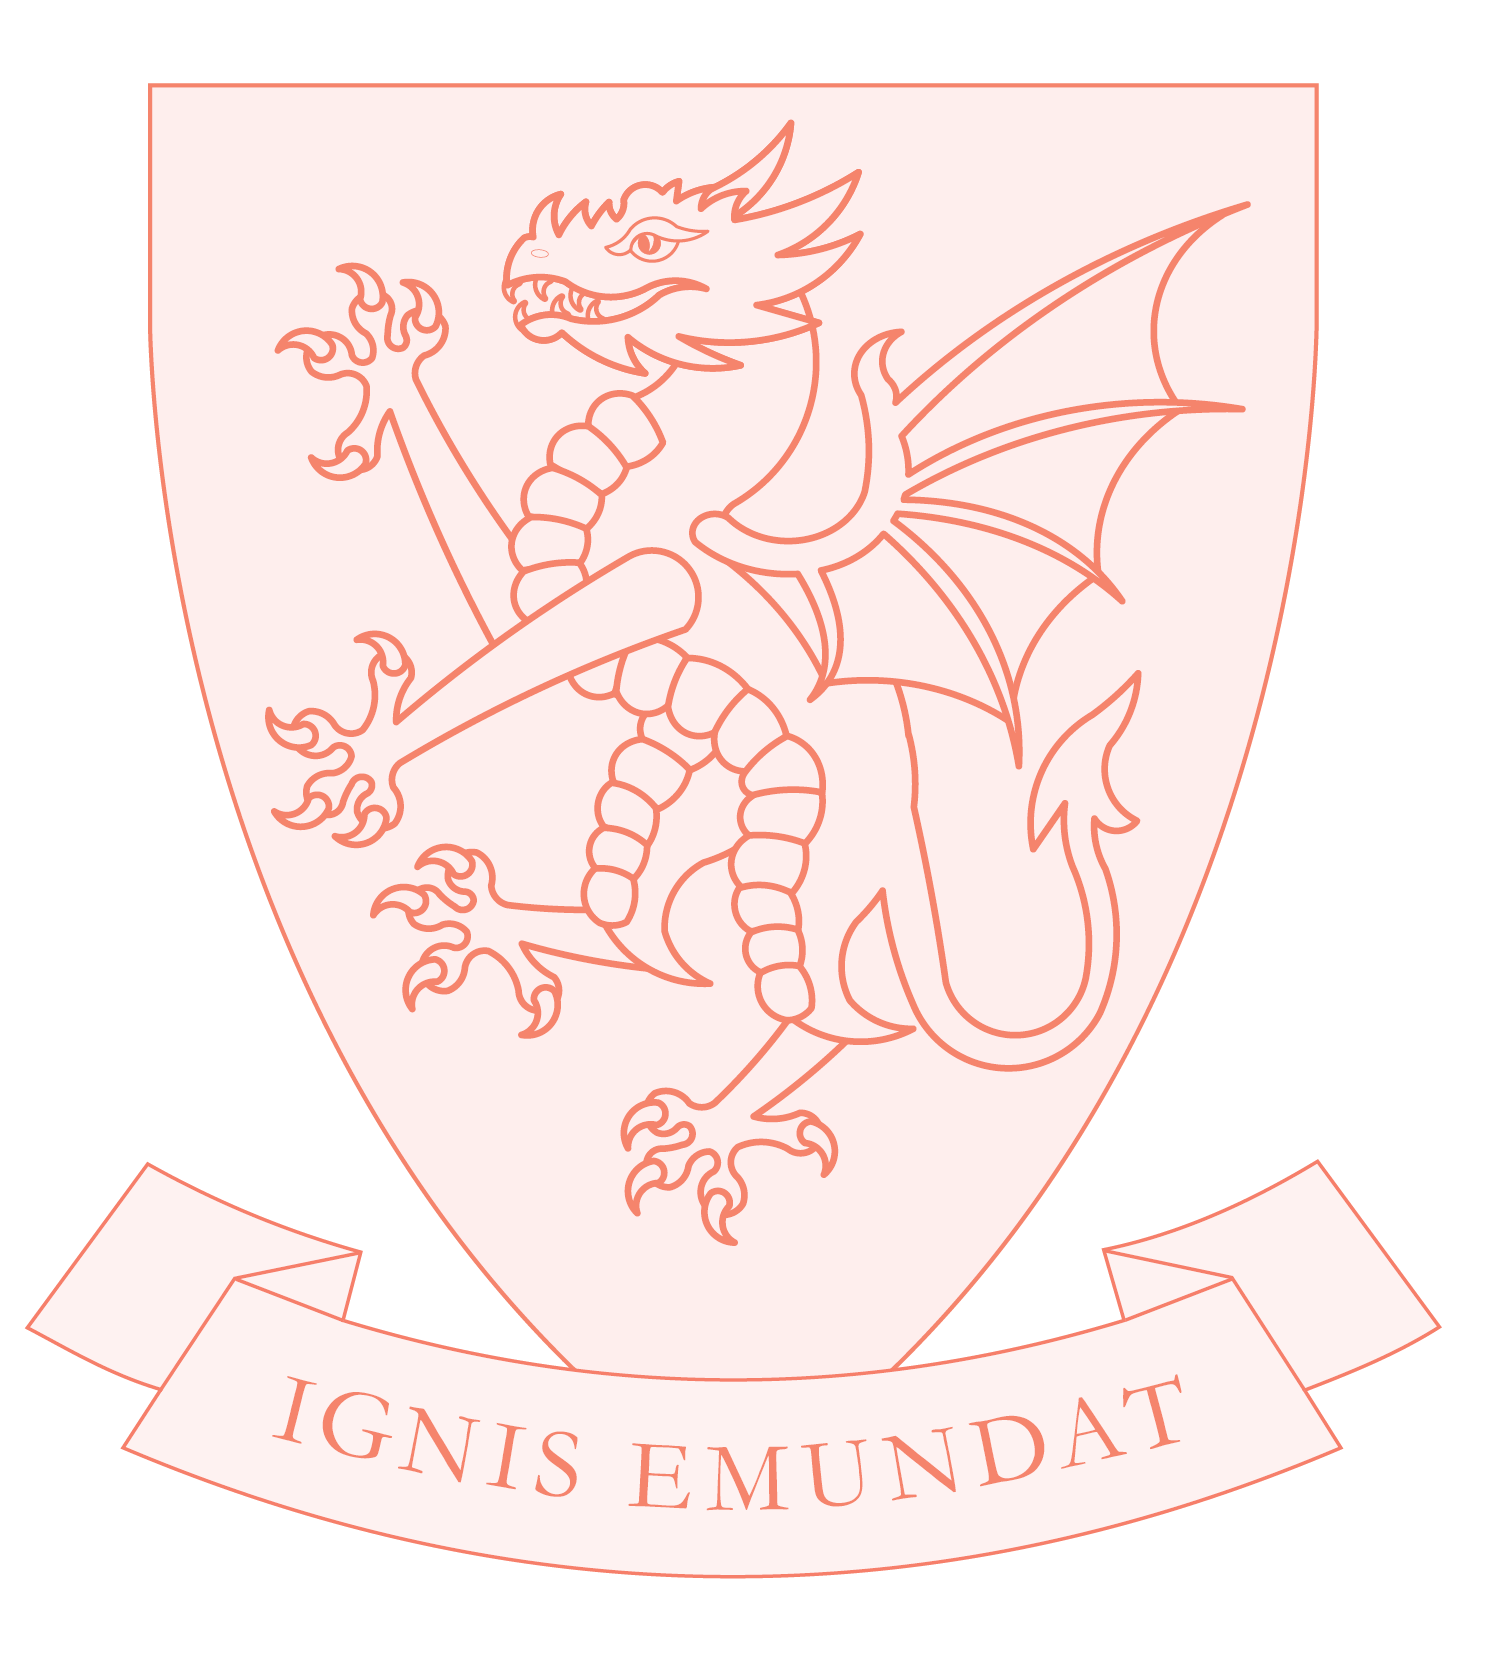 SOTagBurners coat of arms with 'ingis emundat' motto